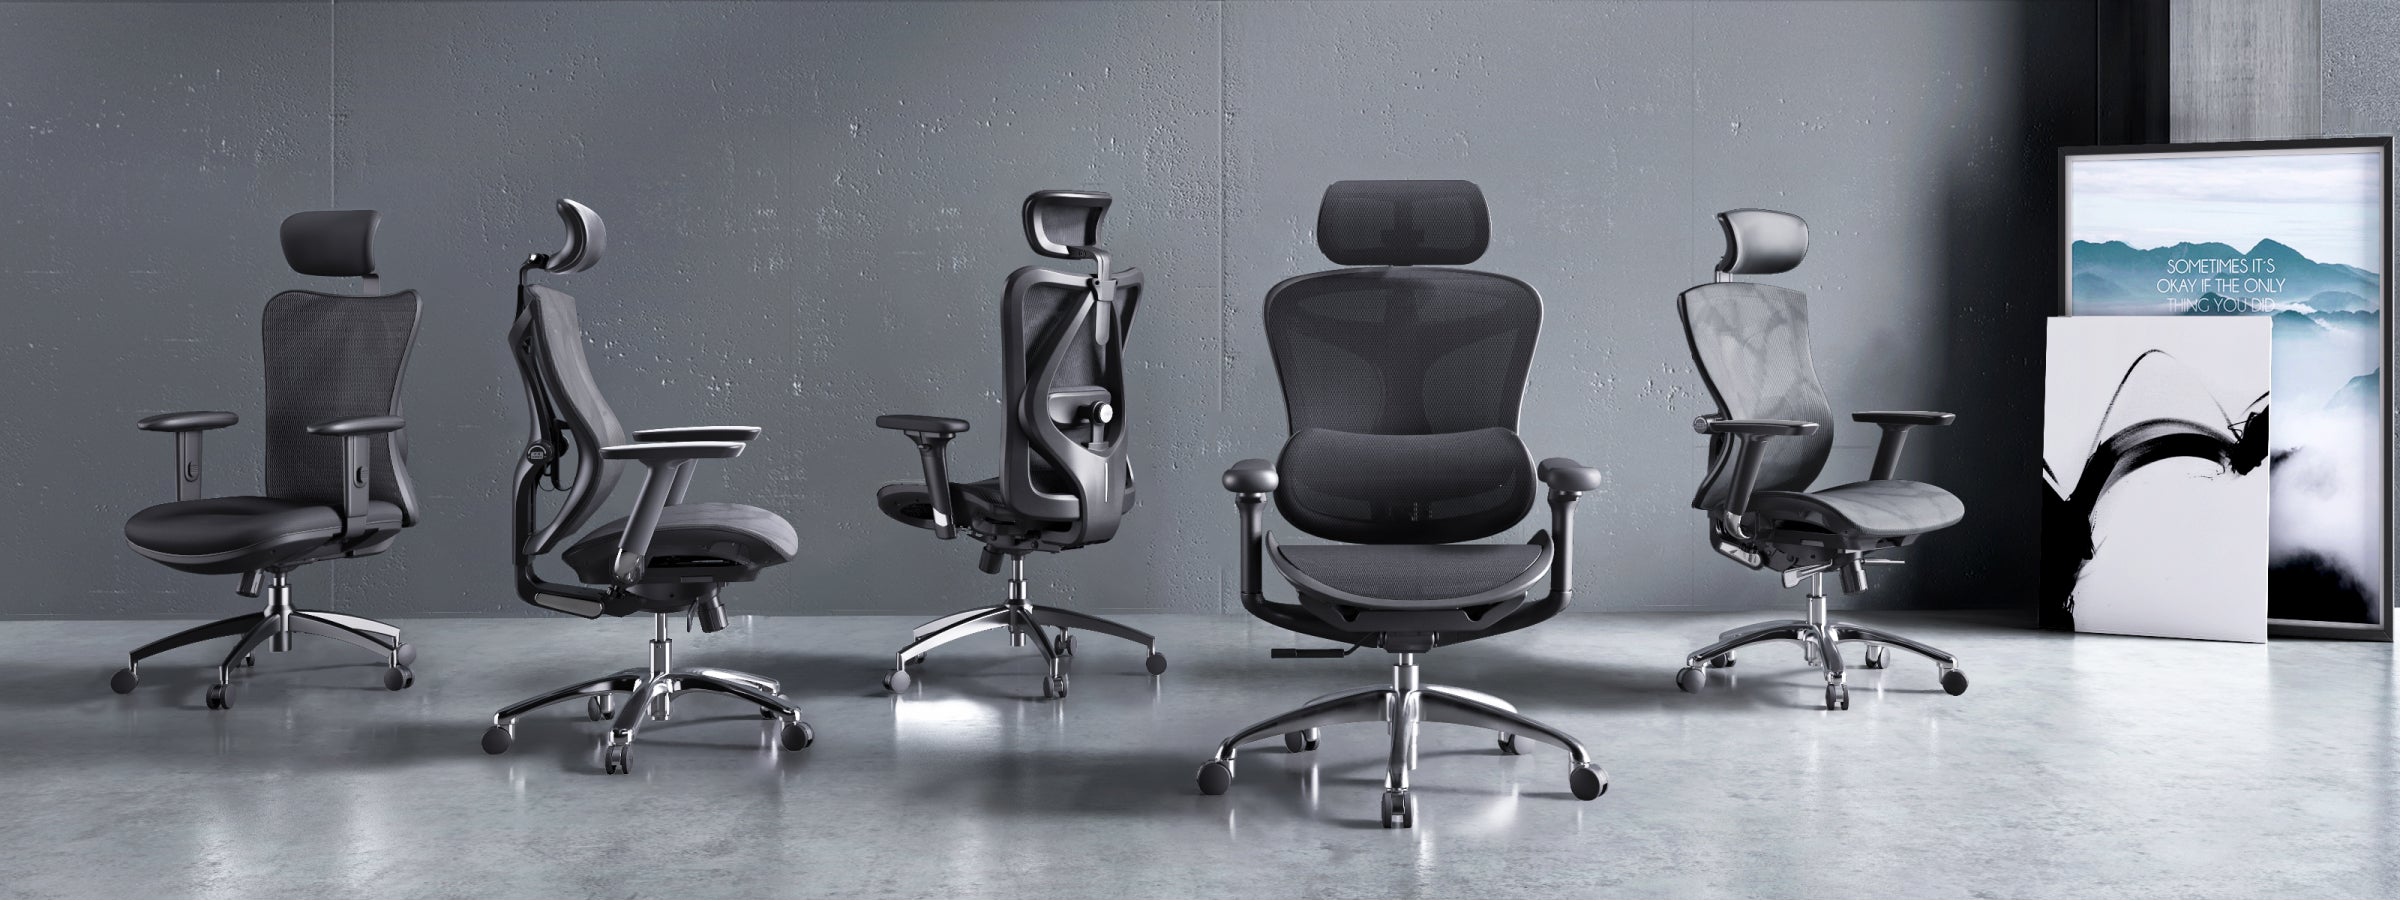 Sihoo M18 Ergonomic Office Chair, Computer Chair Desk Chair High Back –  halalpantry